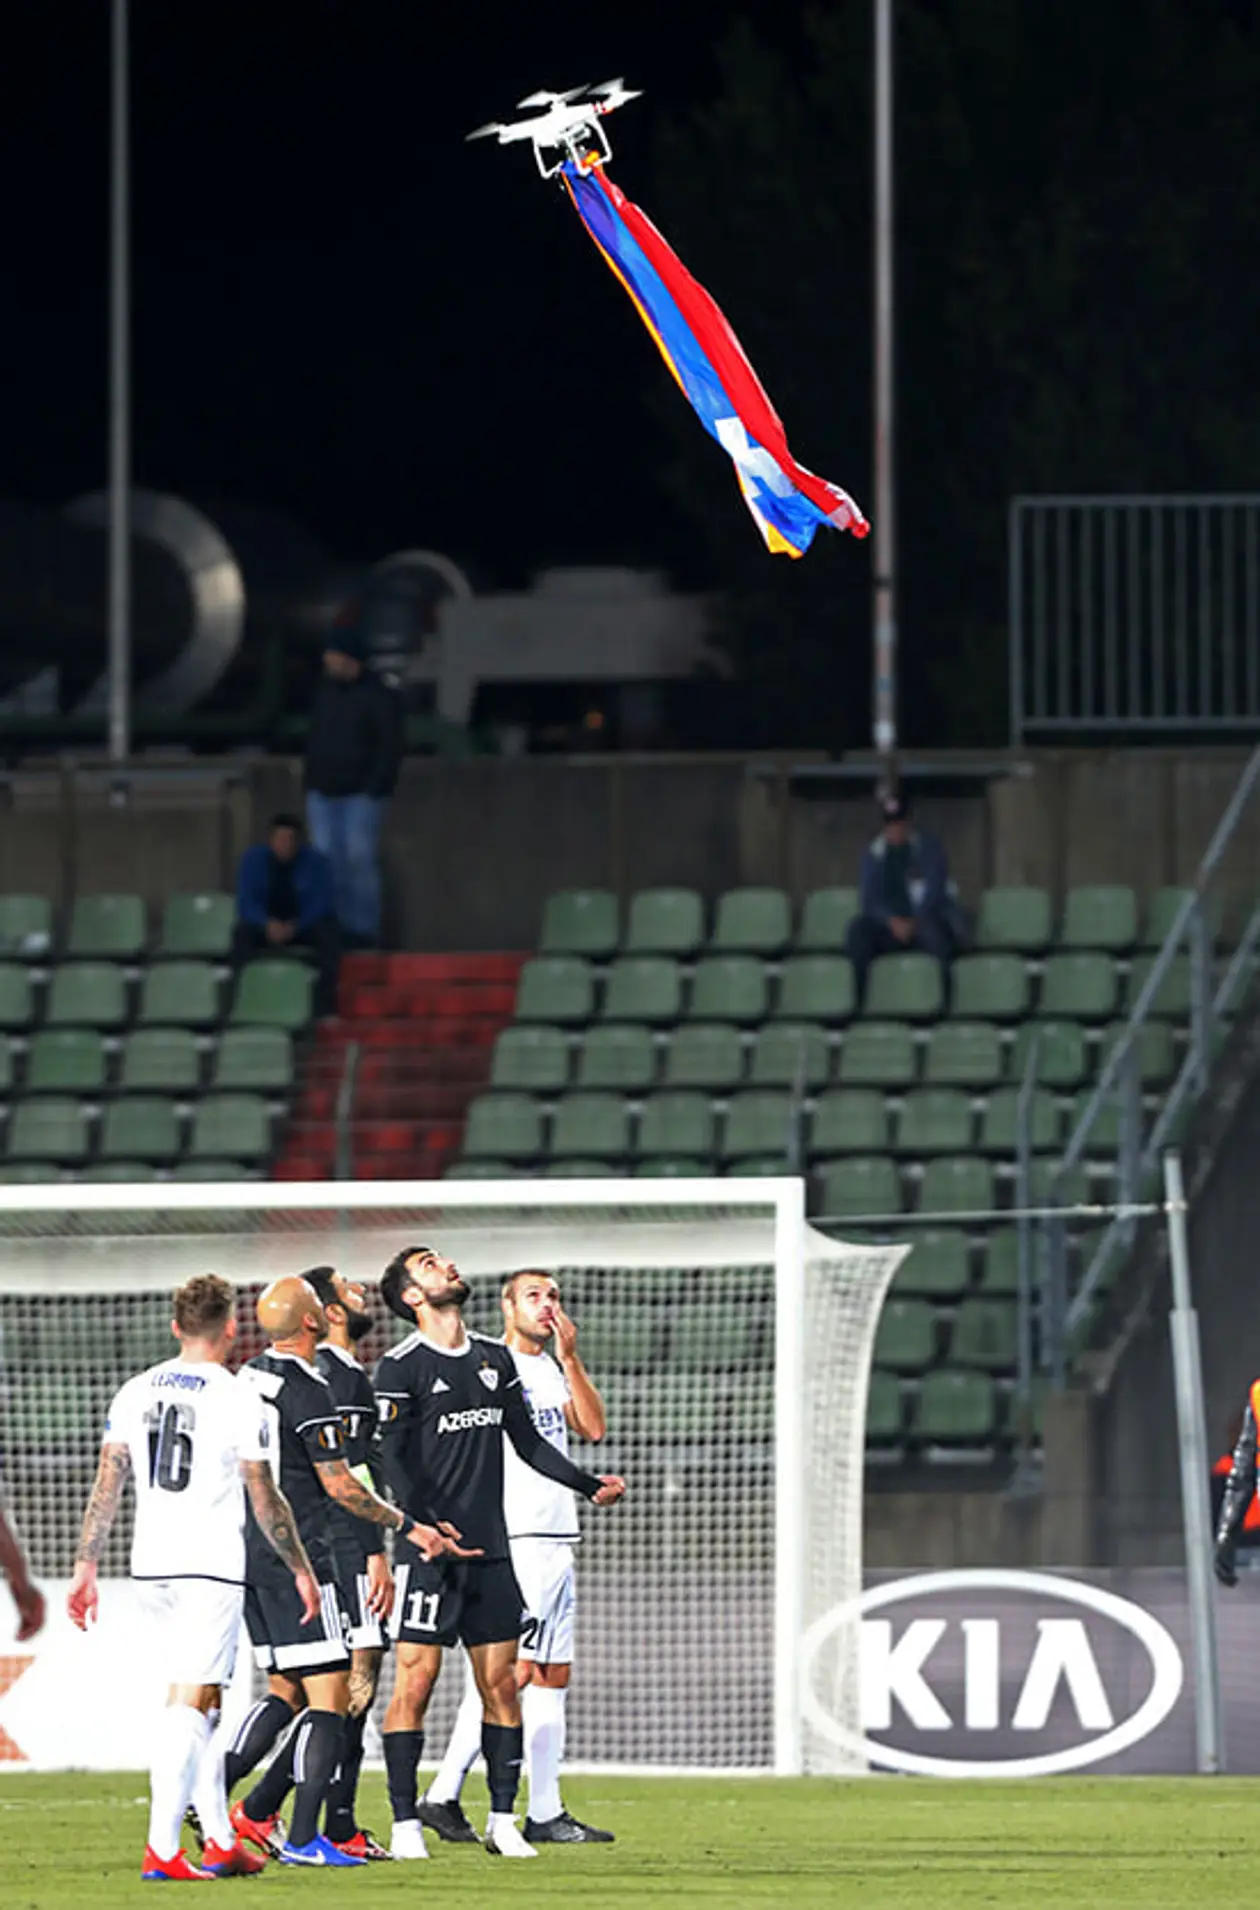 Матч «Карабаха» остановили из-за дрона с флагом Нагорно-Карабахской Республики. Тренер увел команду с поля